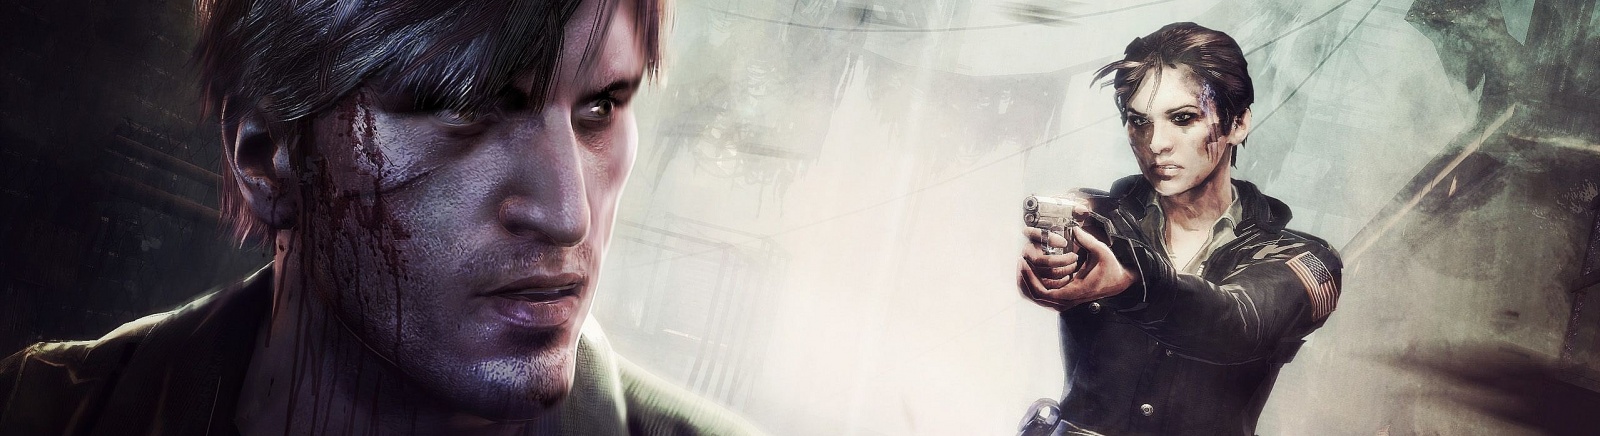 Дата выхода Silent Hill: Downpour (Silent Hill 8)  на PS3 и Xbox 360 в России и во всем мире